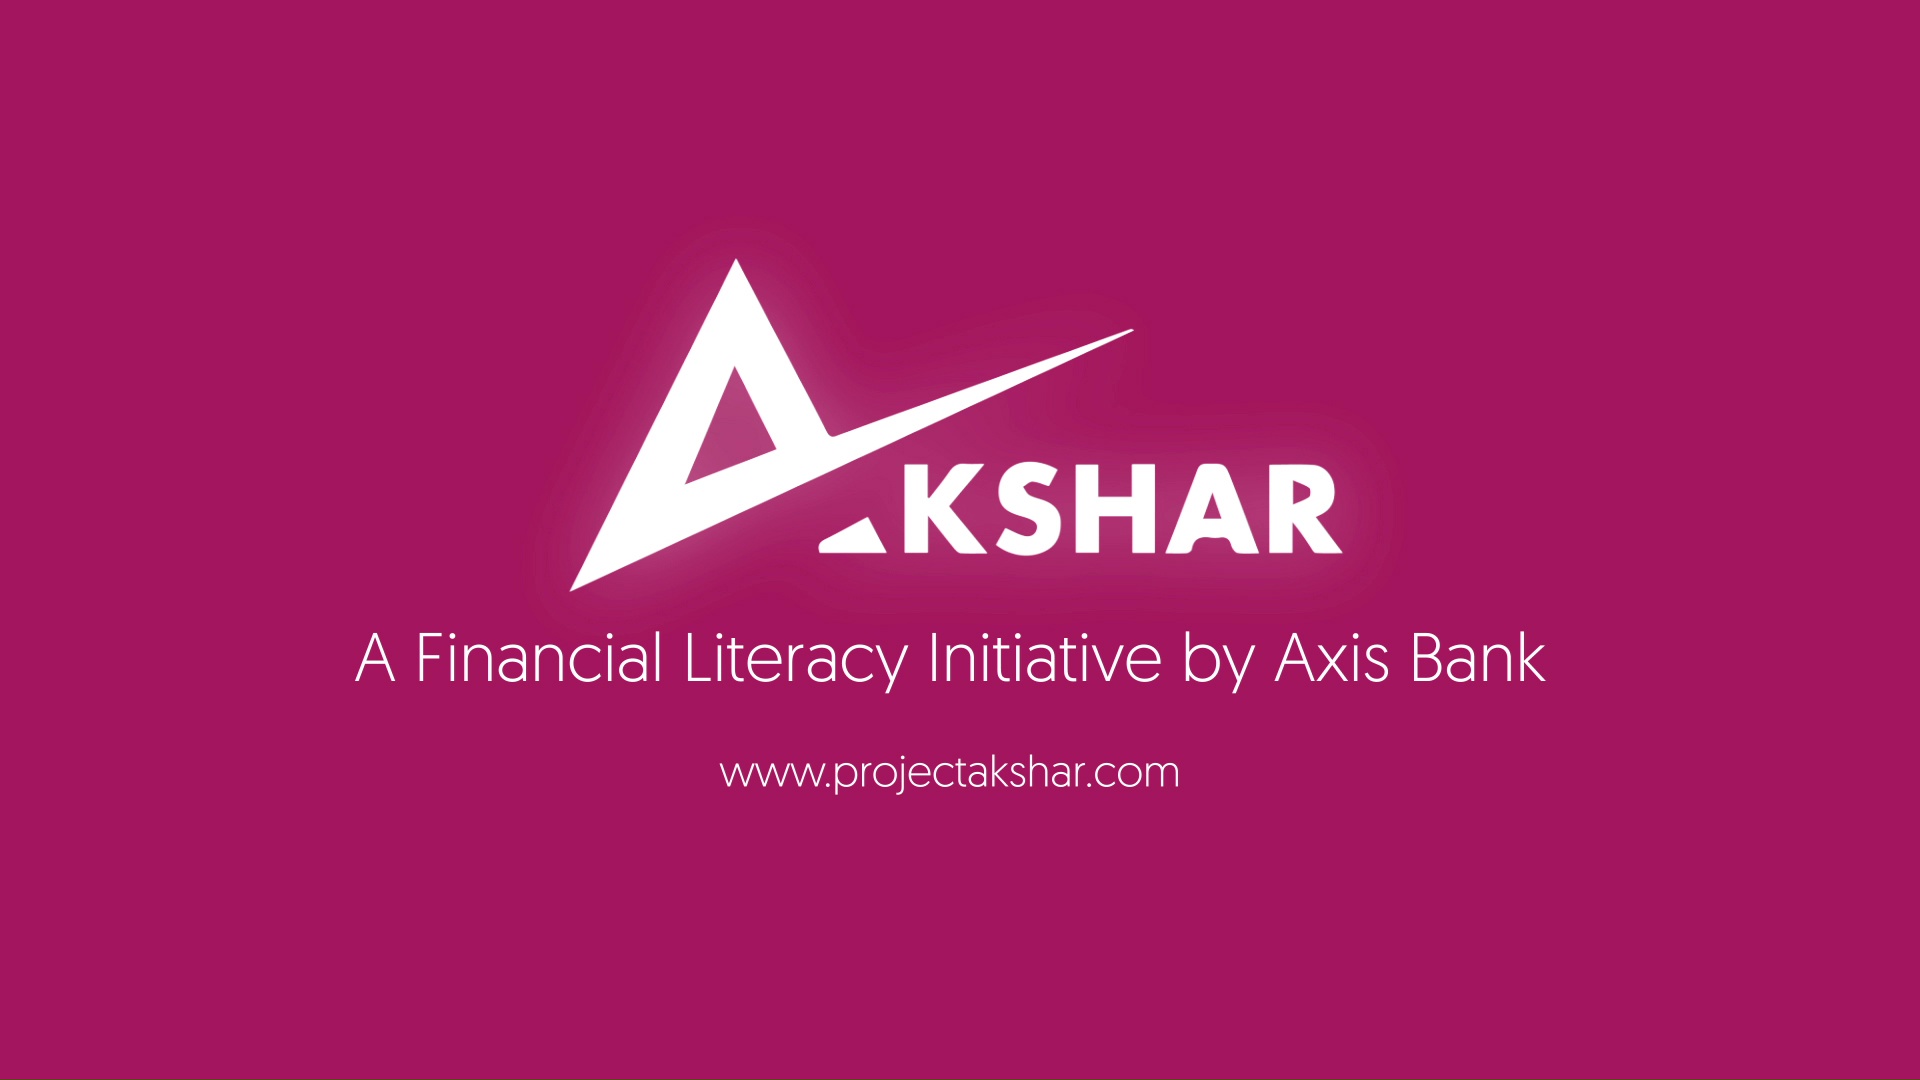 Akshar Financial Literacy